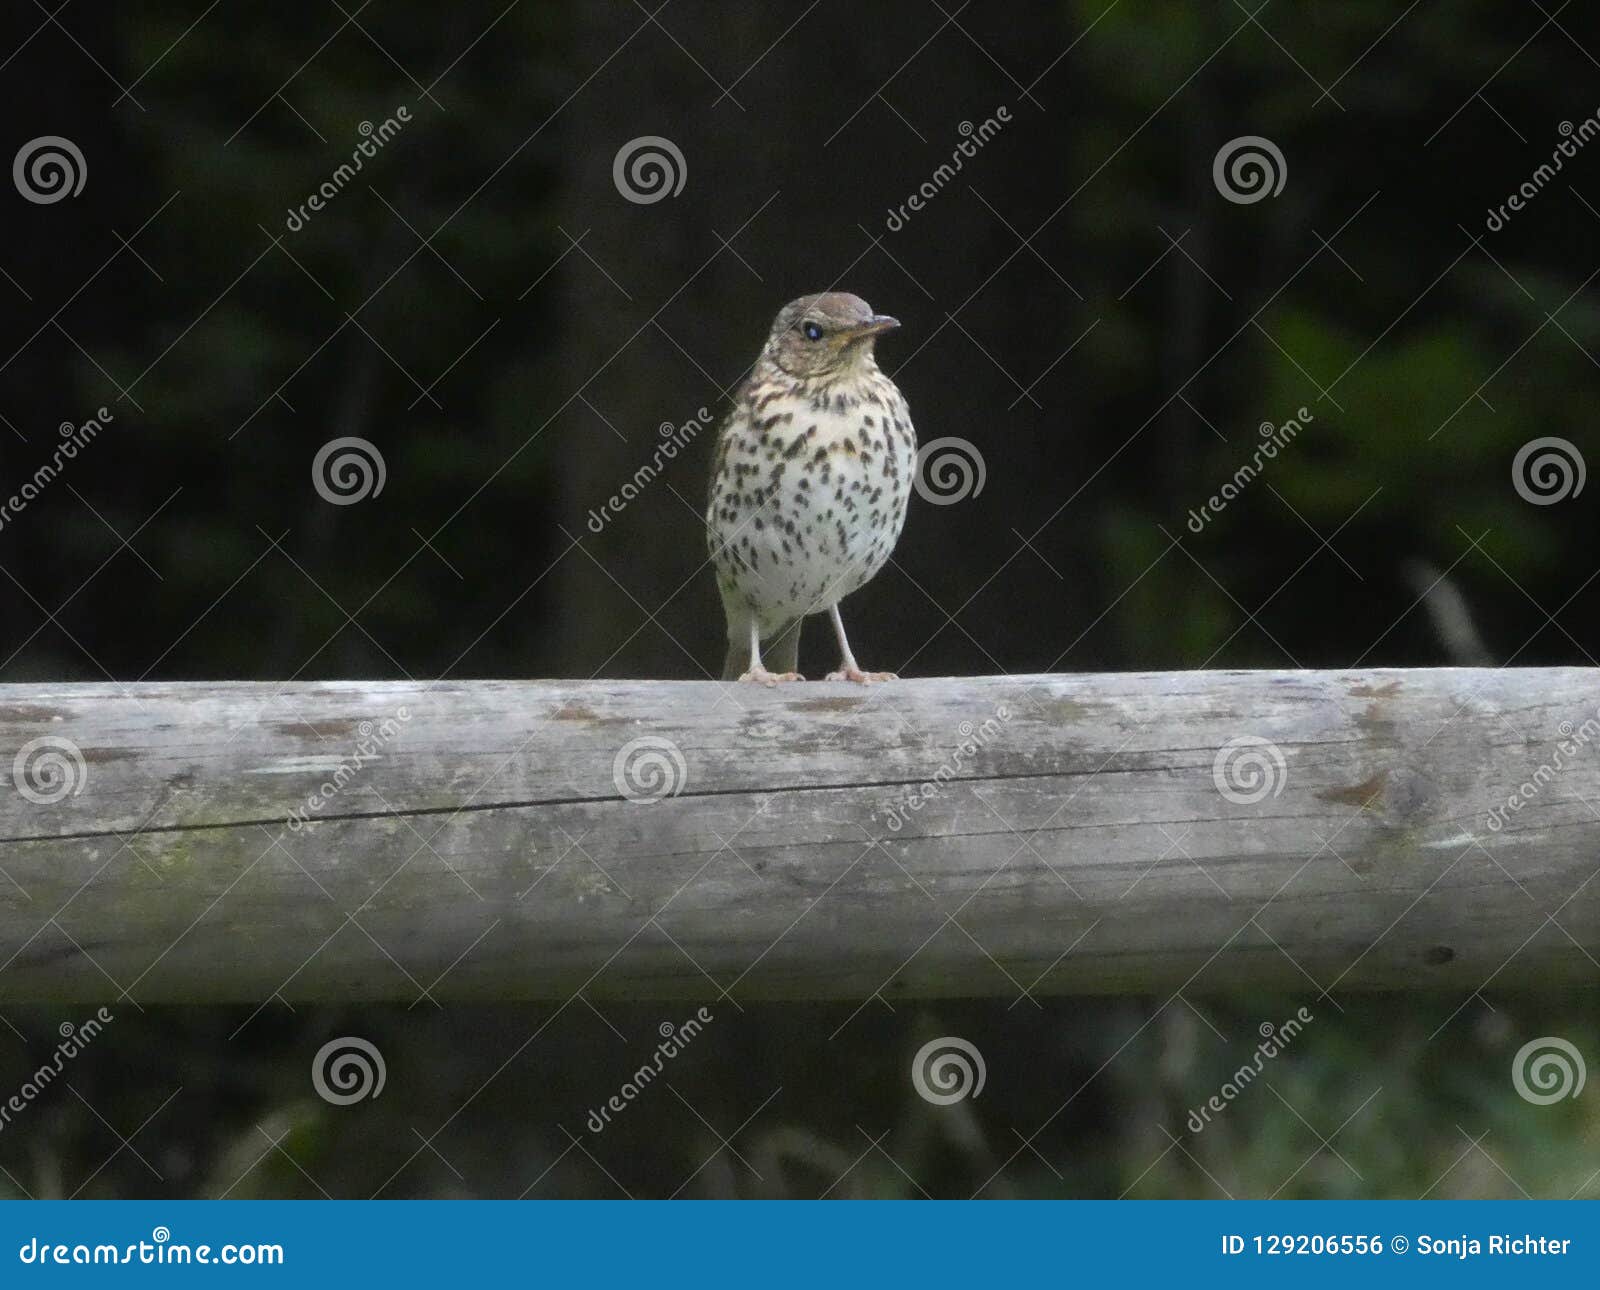 trush bird sitting on a wood stalk